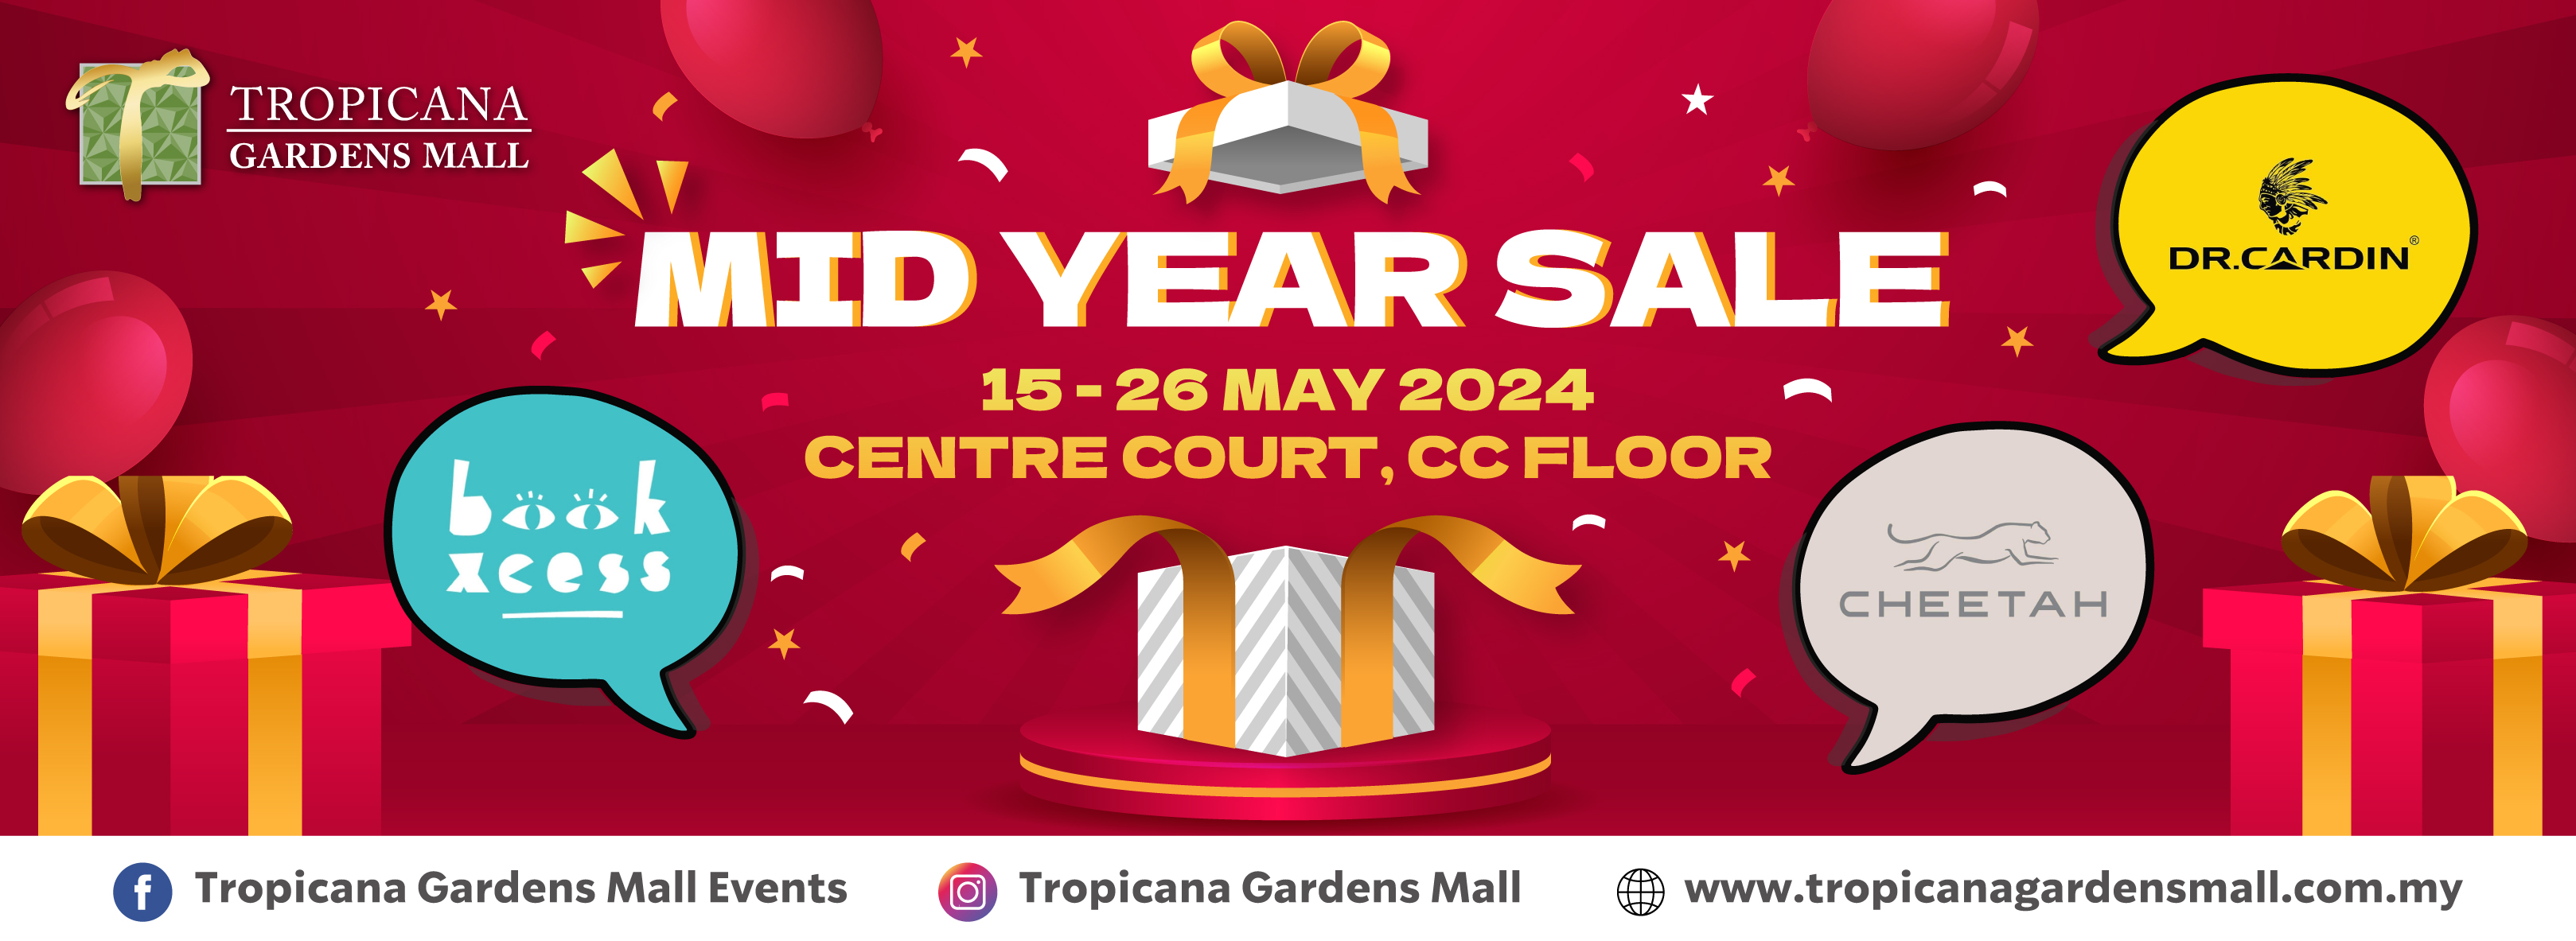 Tropicana Gardens Mall Mid Year Sale